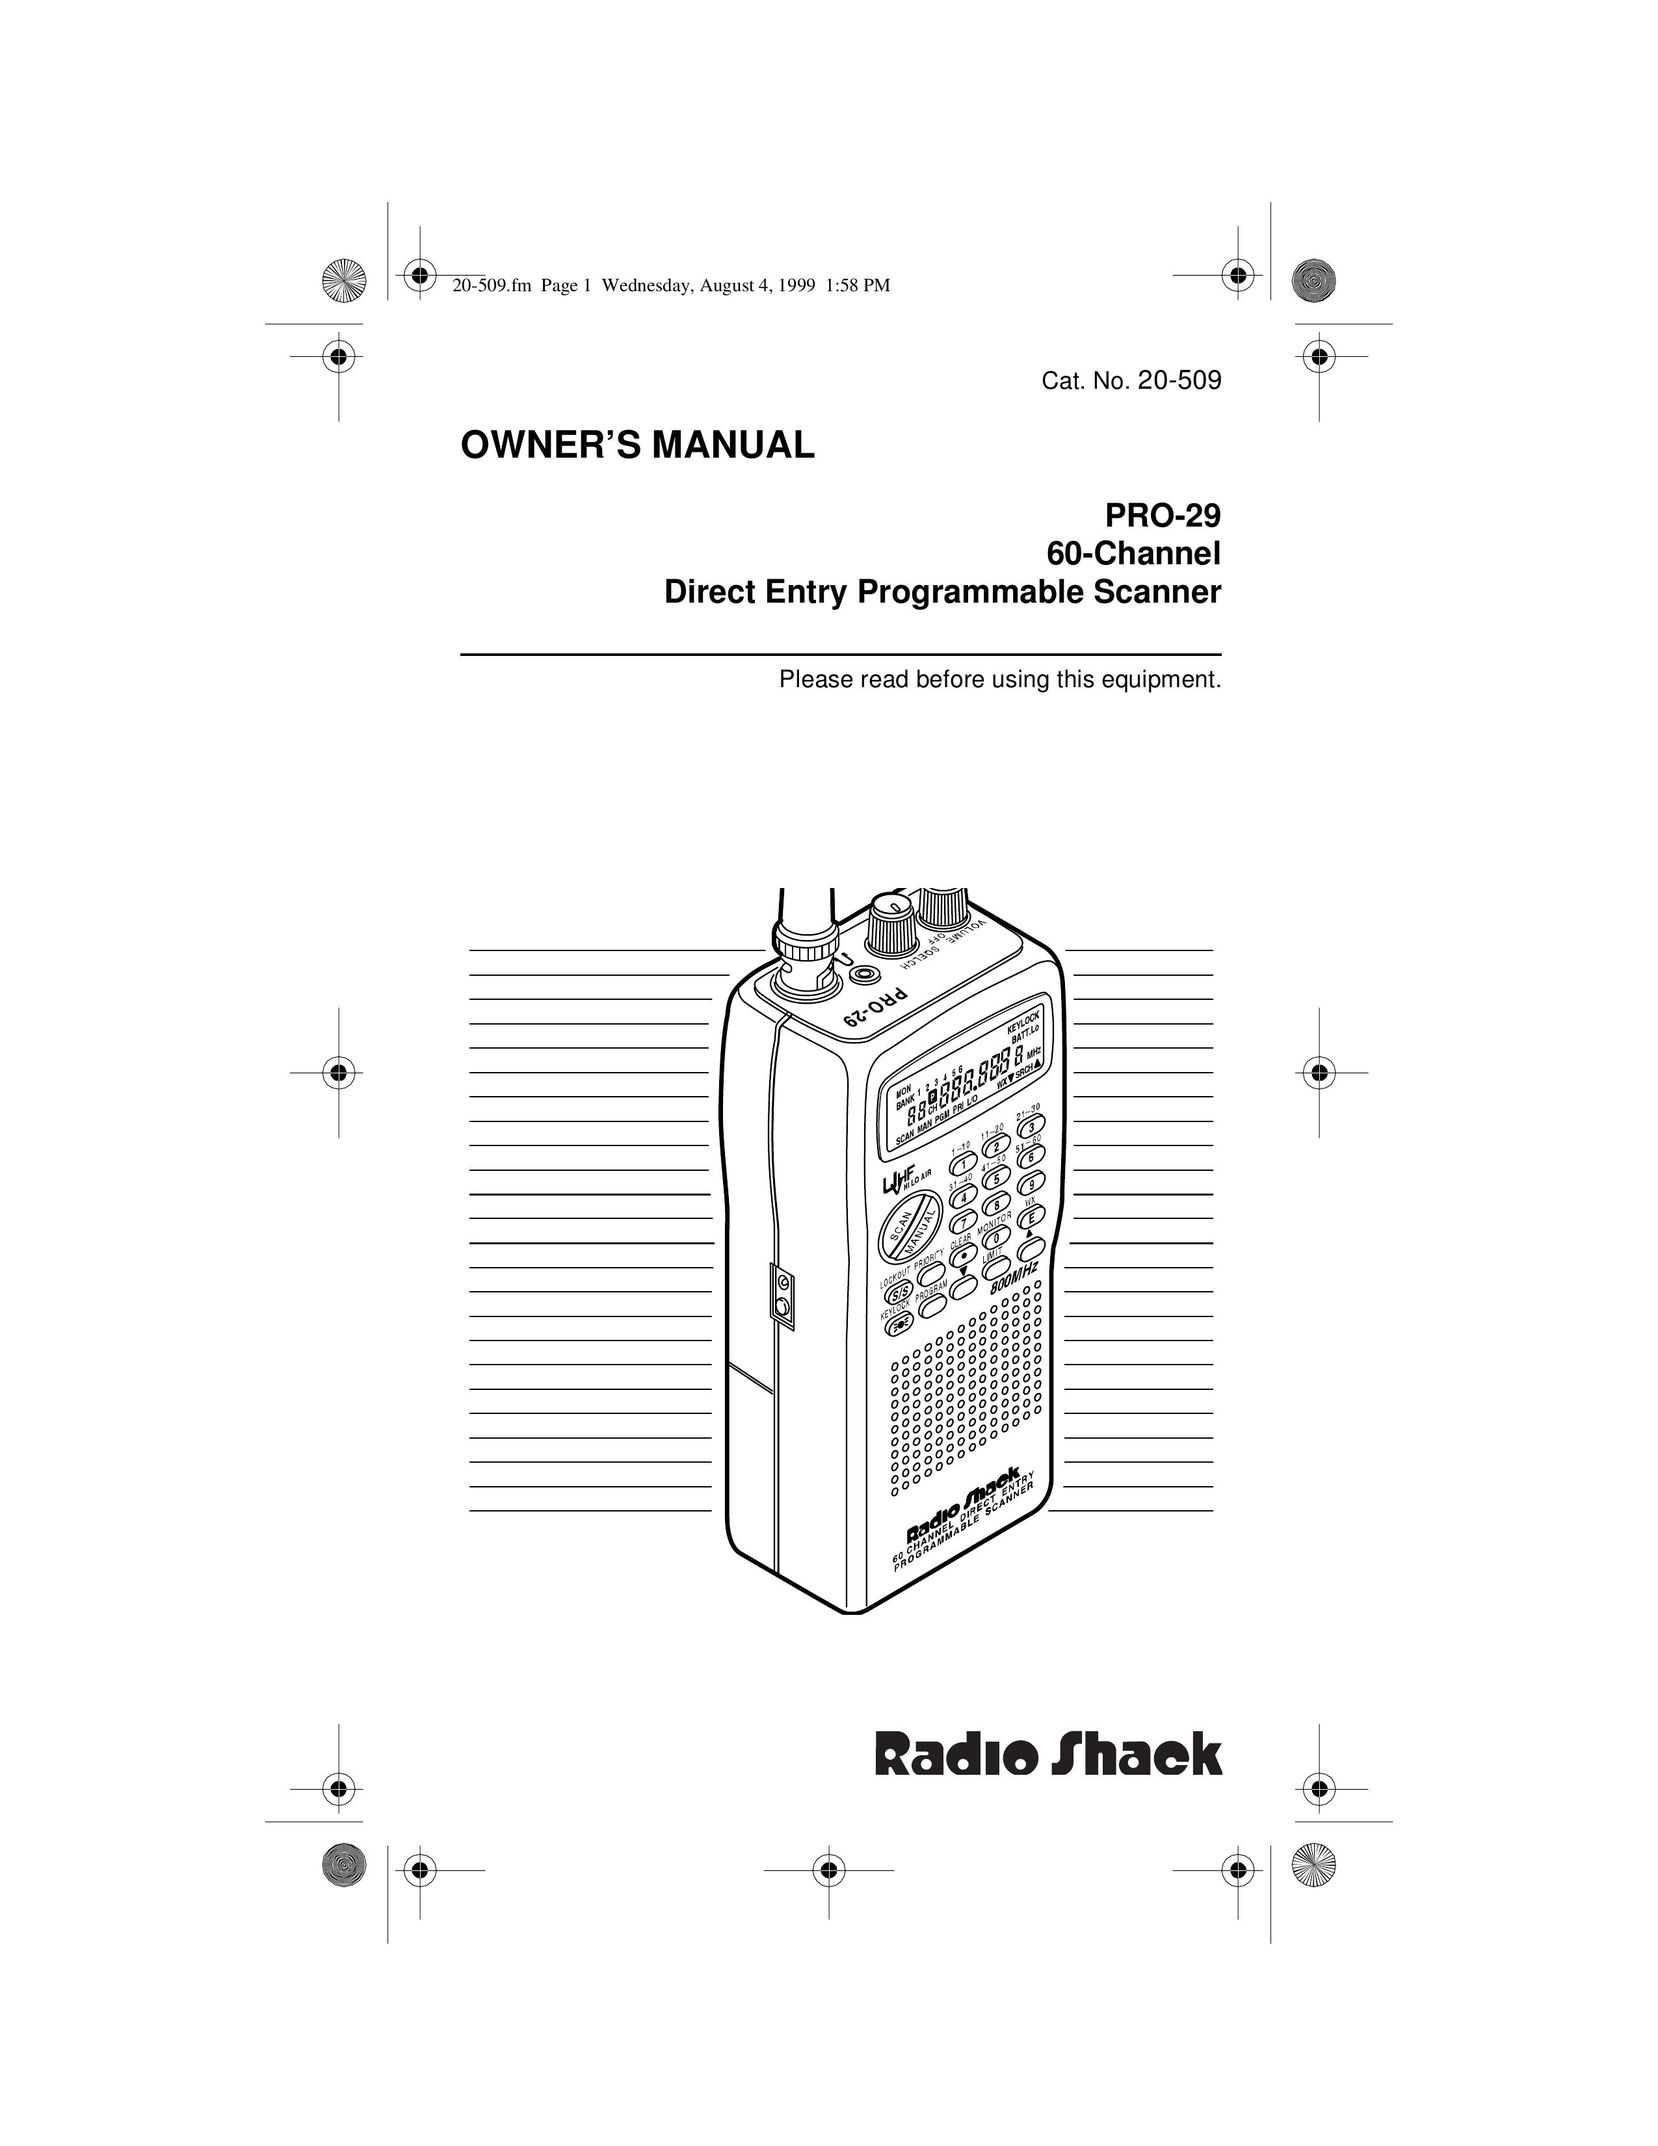 Radio Shack PRO-29 Scanner User Manual